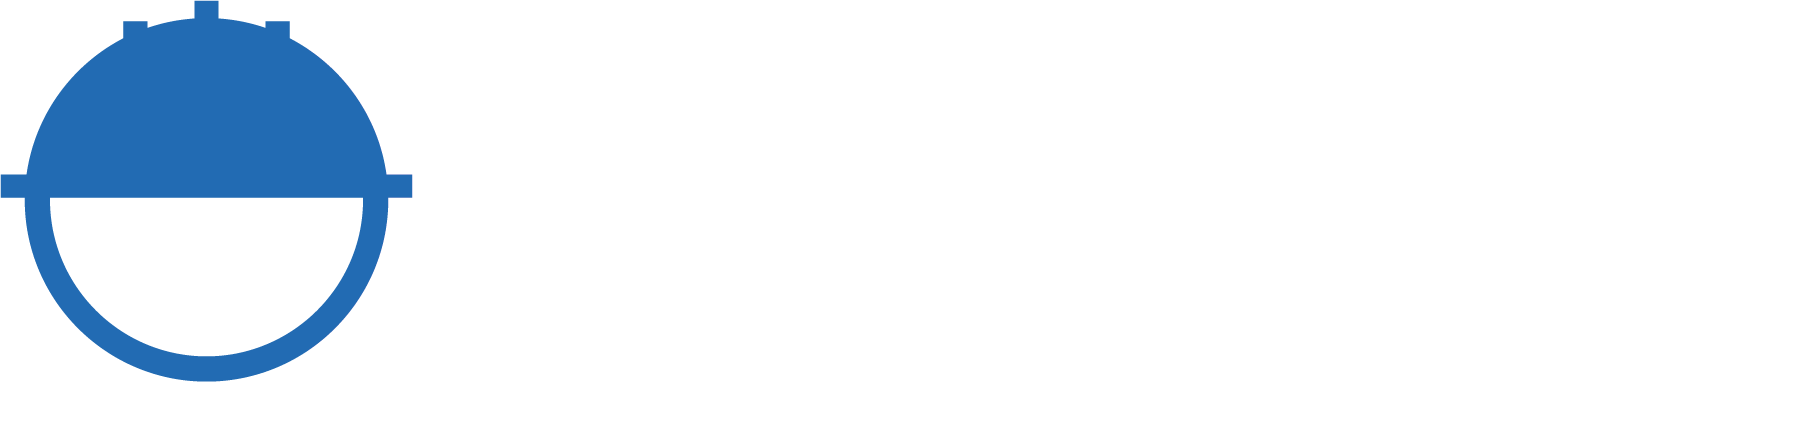 ECLON logo transparant wit